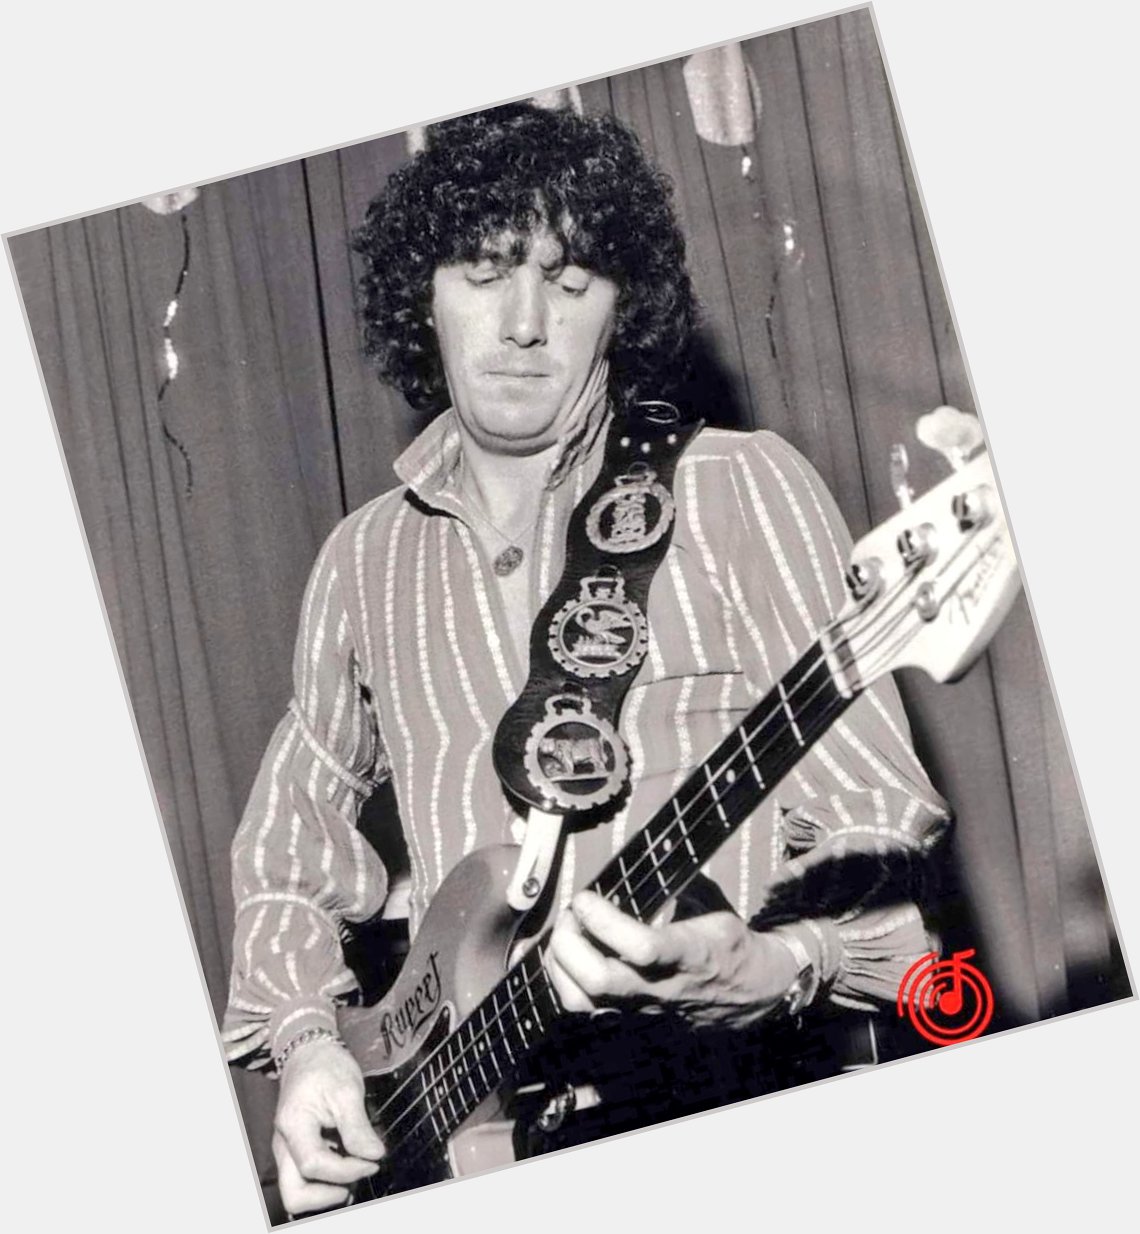 Happy Birthday  Nick Simper ,.76 November 3, 1945   the original bass player for Deep Purple. 